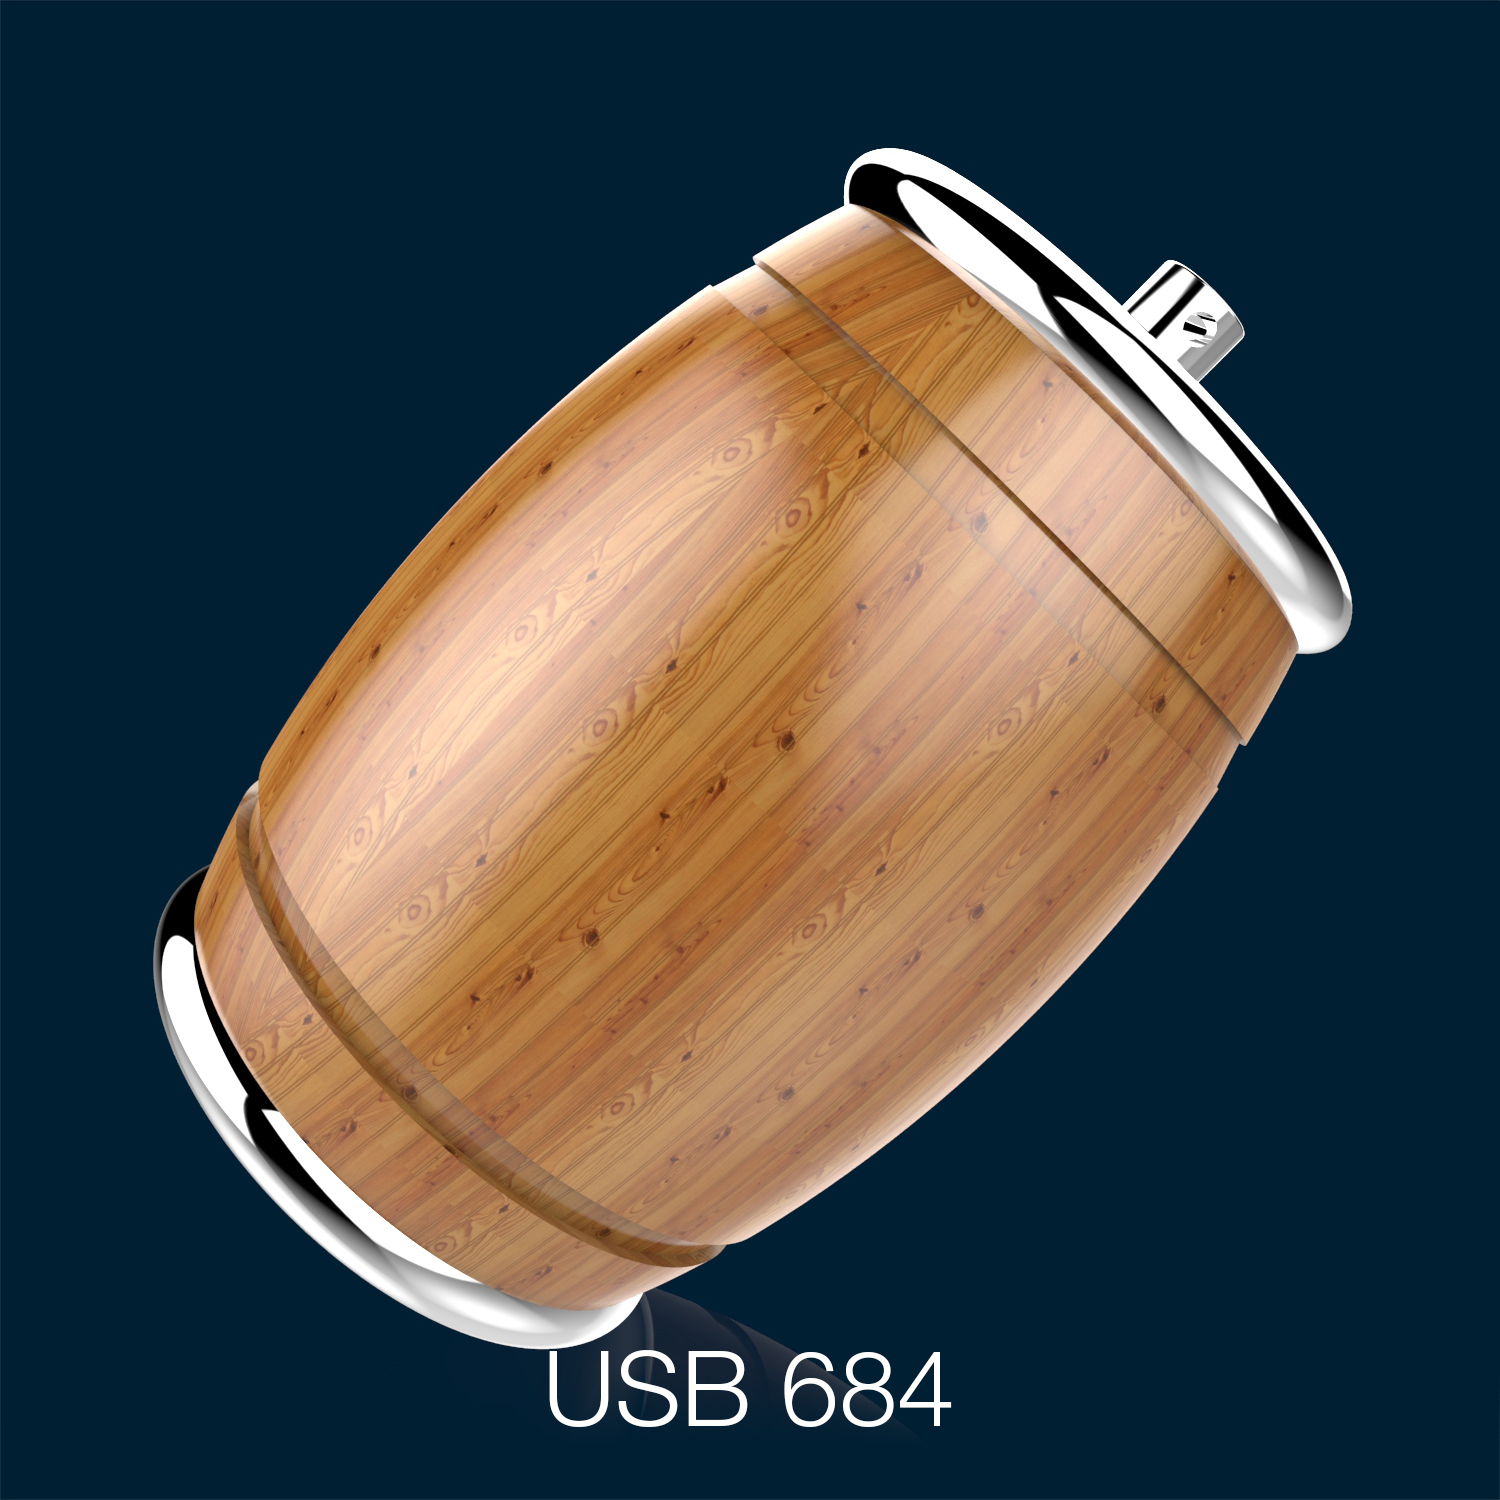 USB 684